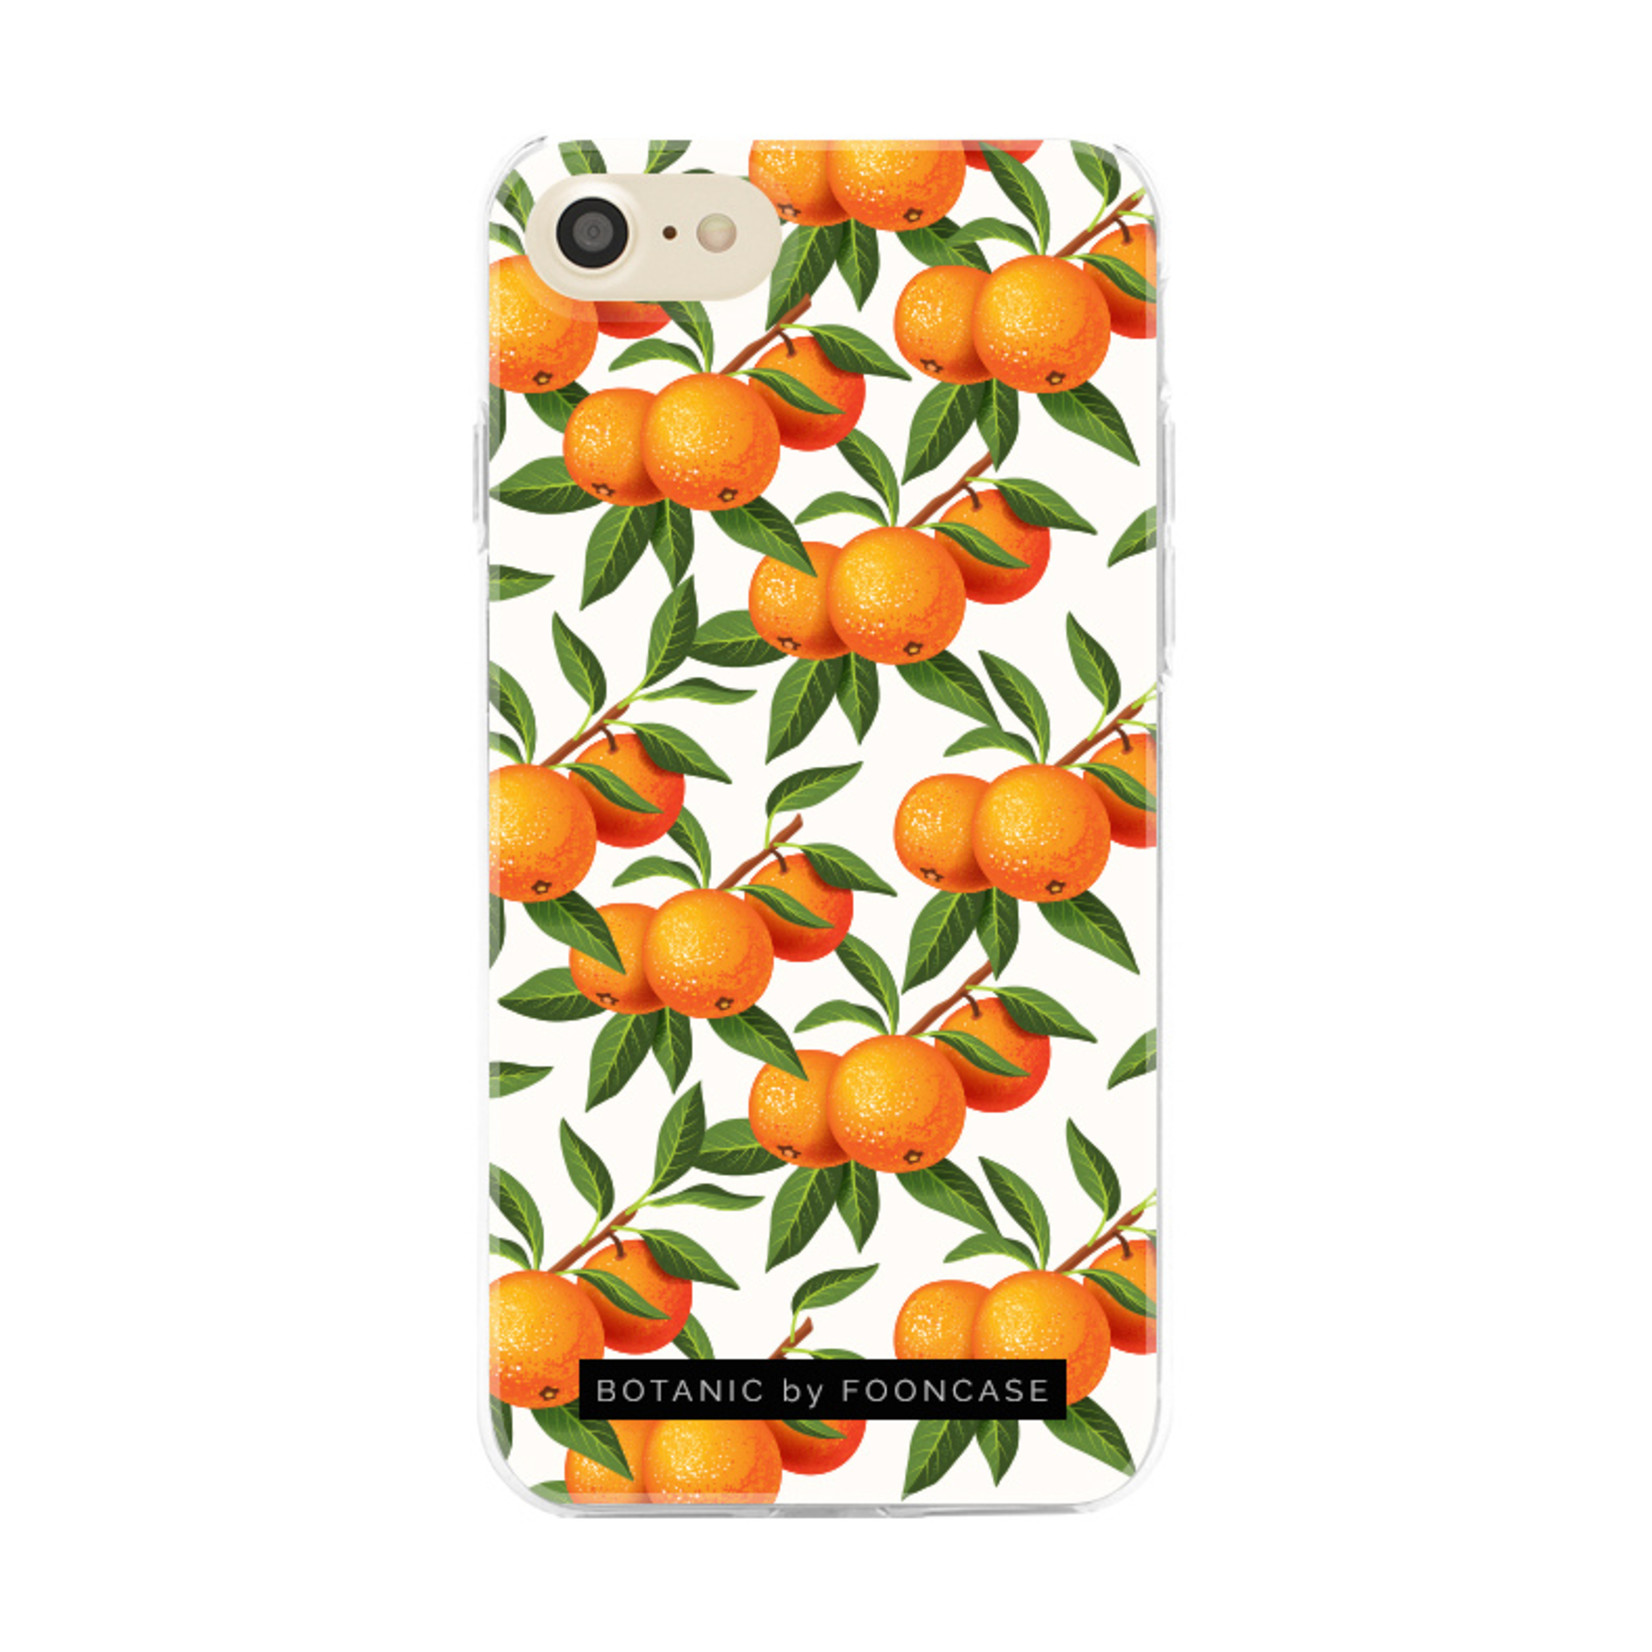 FOONCASE iPhone SE (2020) Case - Botanic Manderin